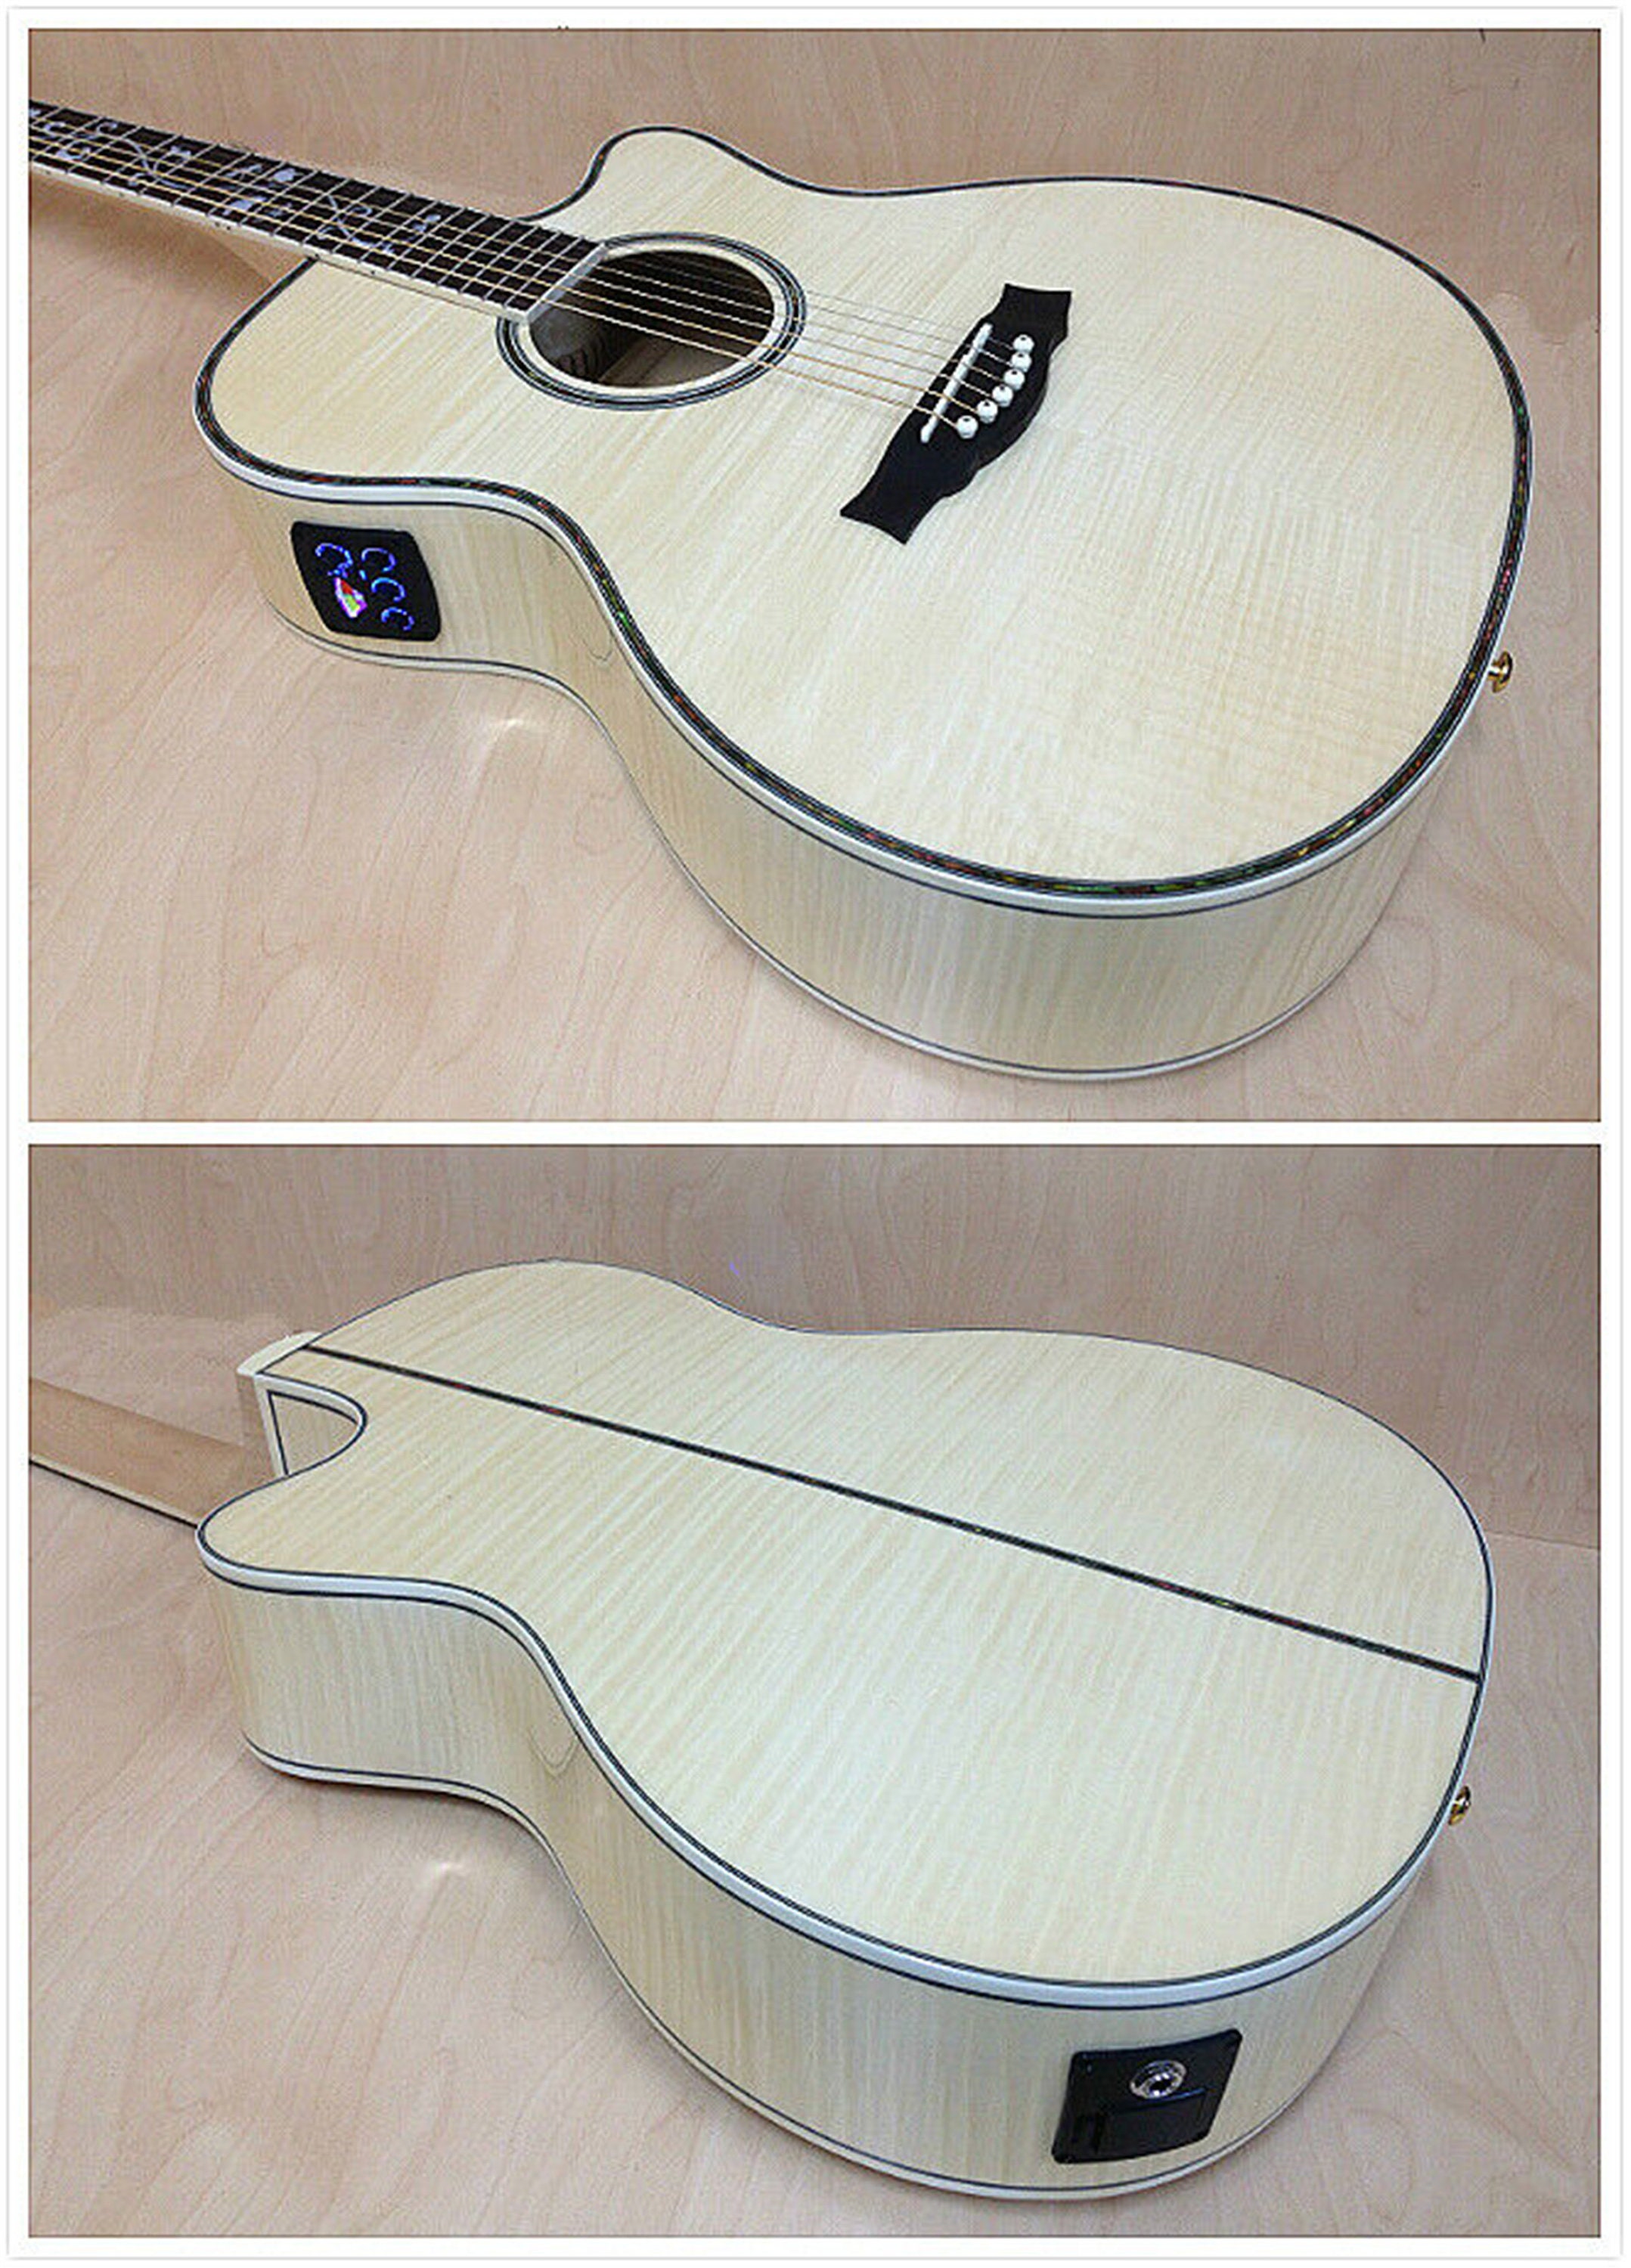 Caraya SDG-837 CEQ/N All Flame Maple Acoustic Guitar,eq/tunerfree Gig Bag -   Canada